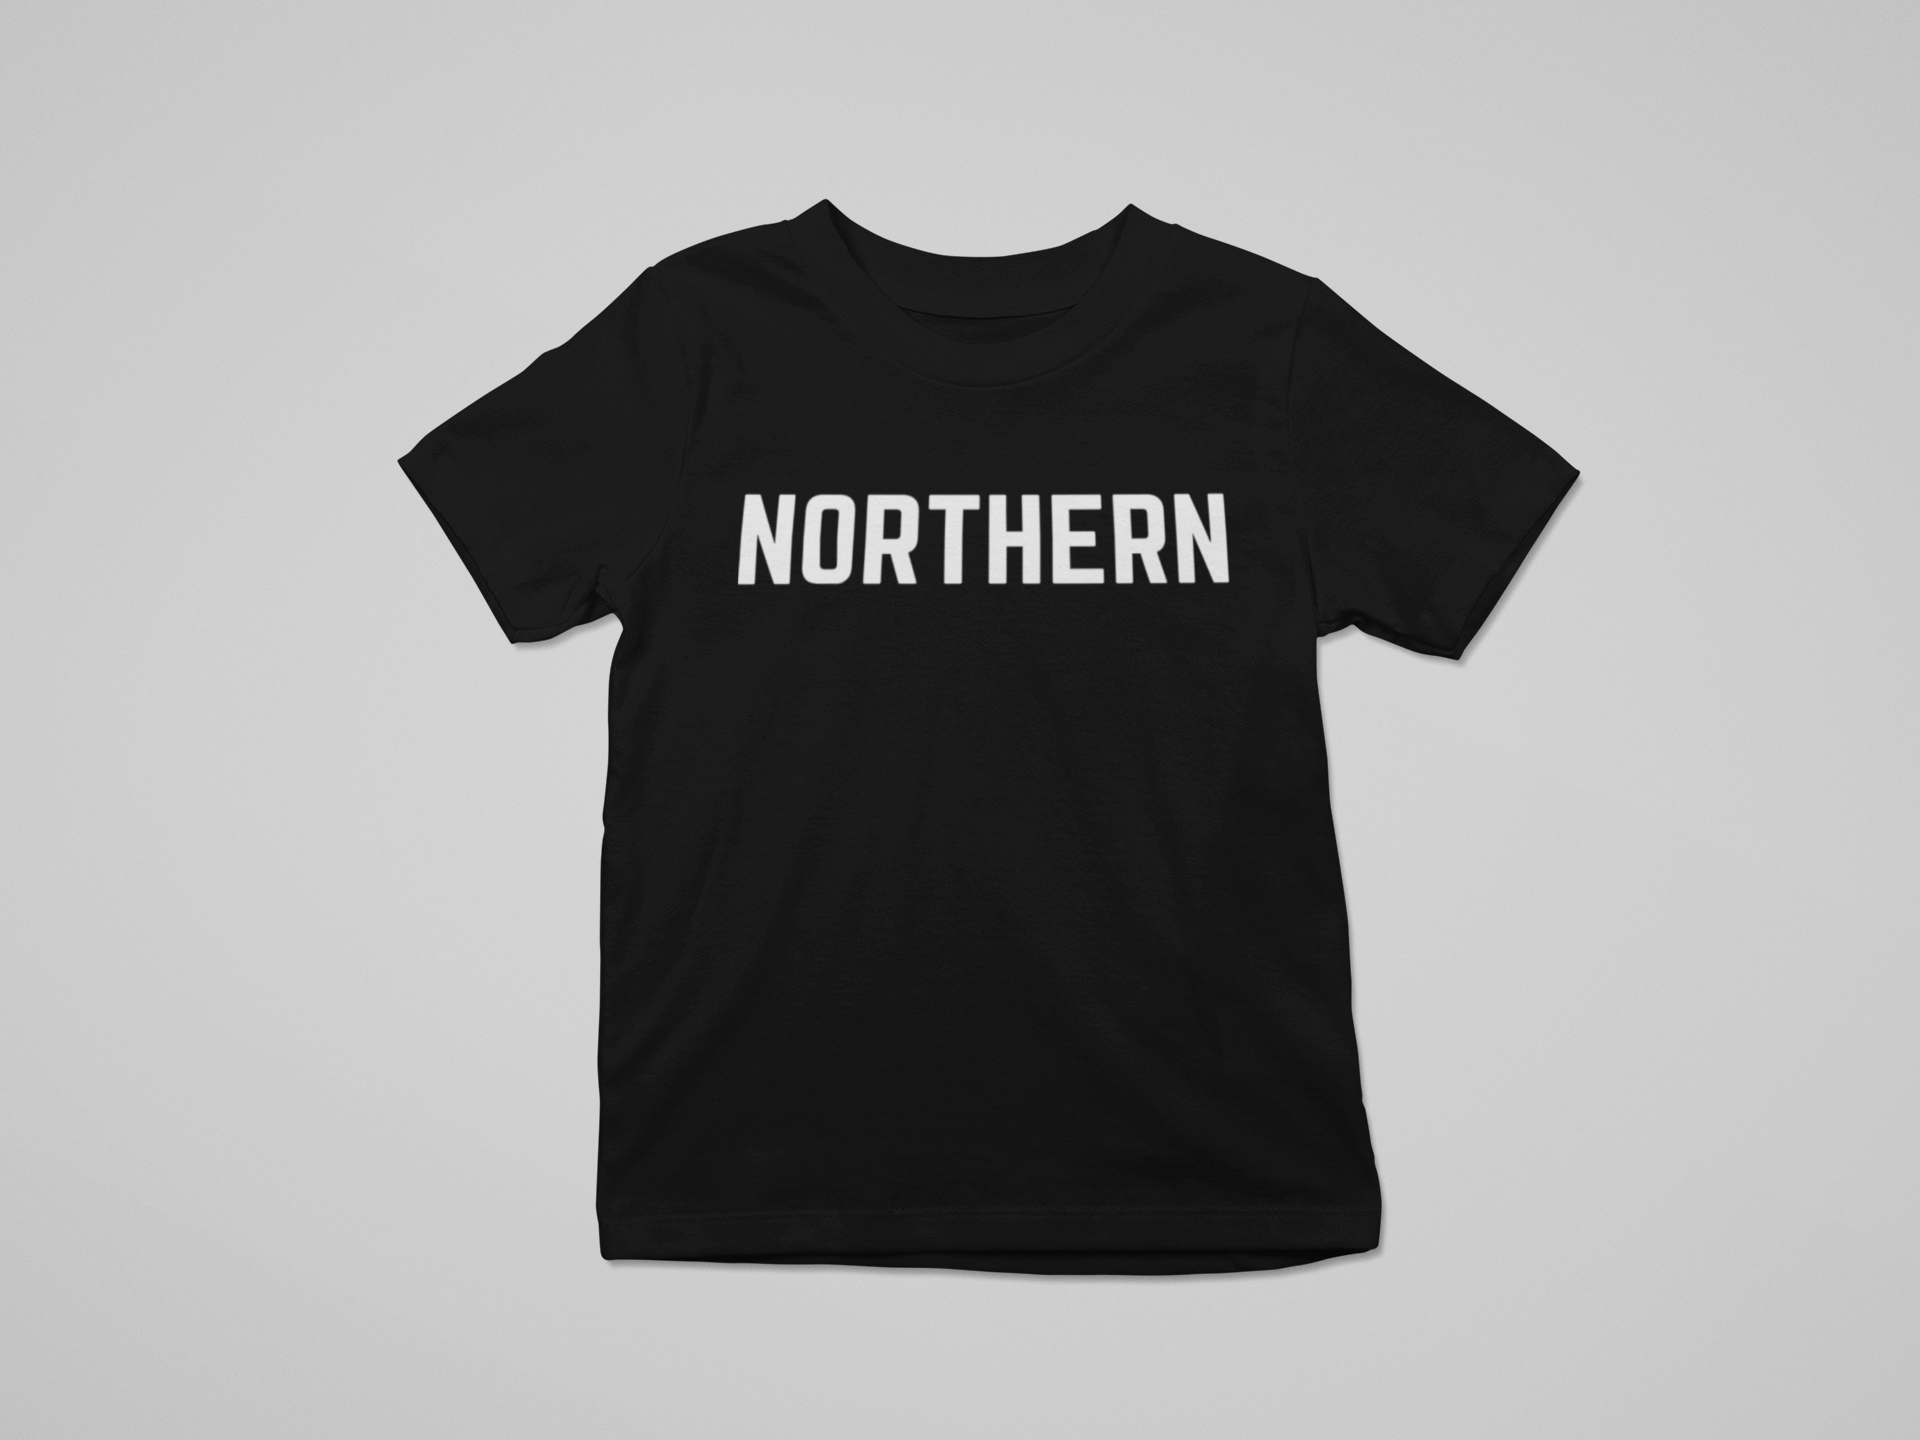 NORTHERN Baby/Kids T-Shirt